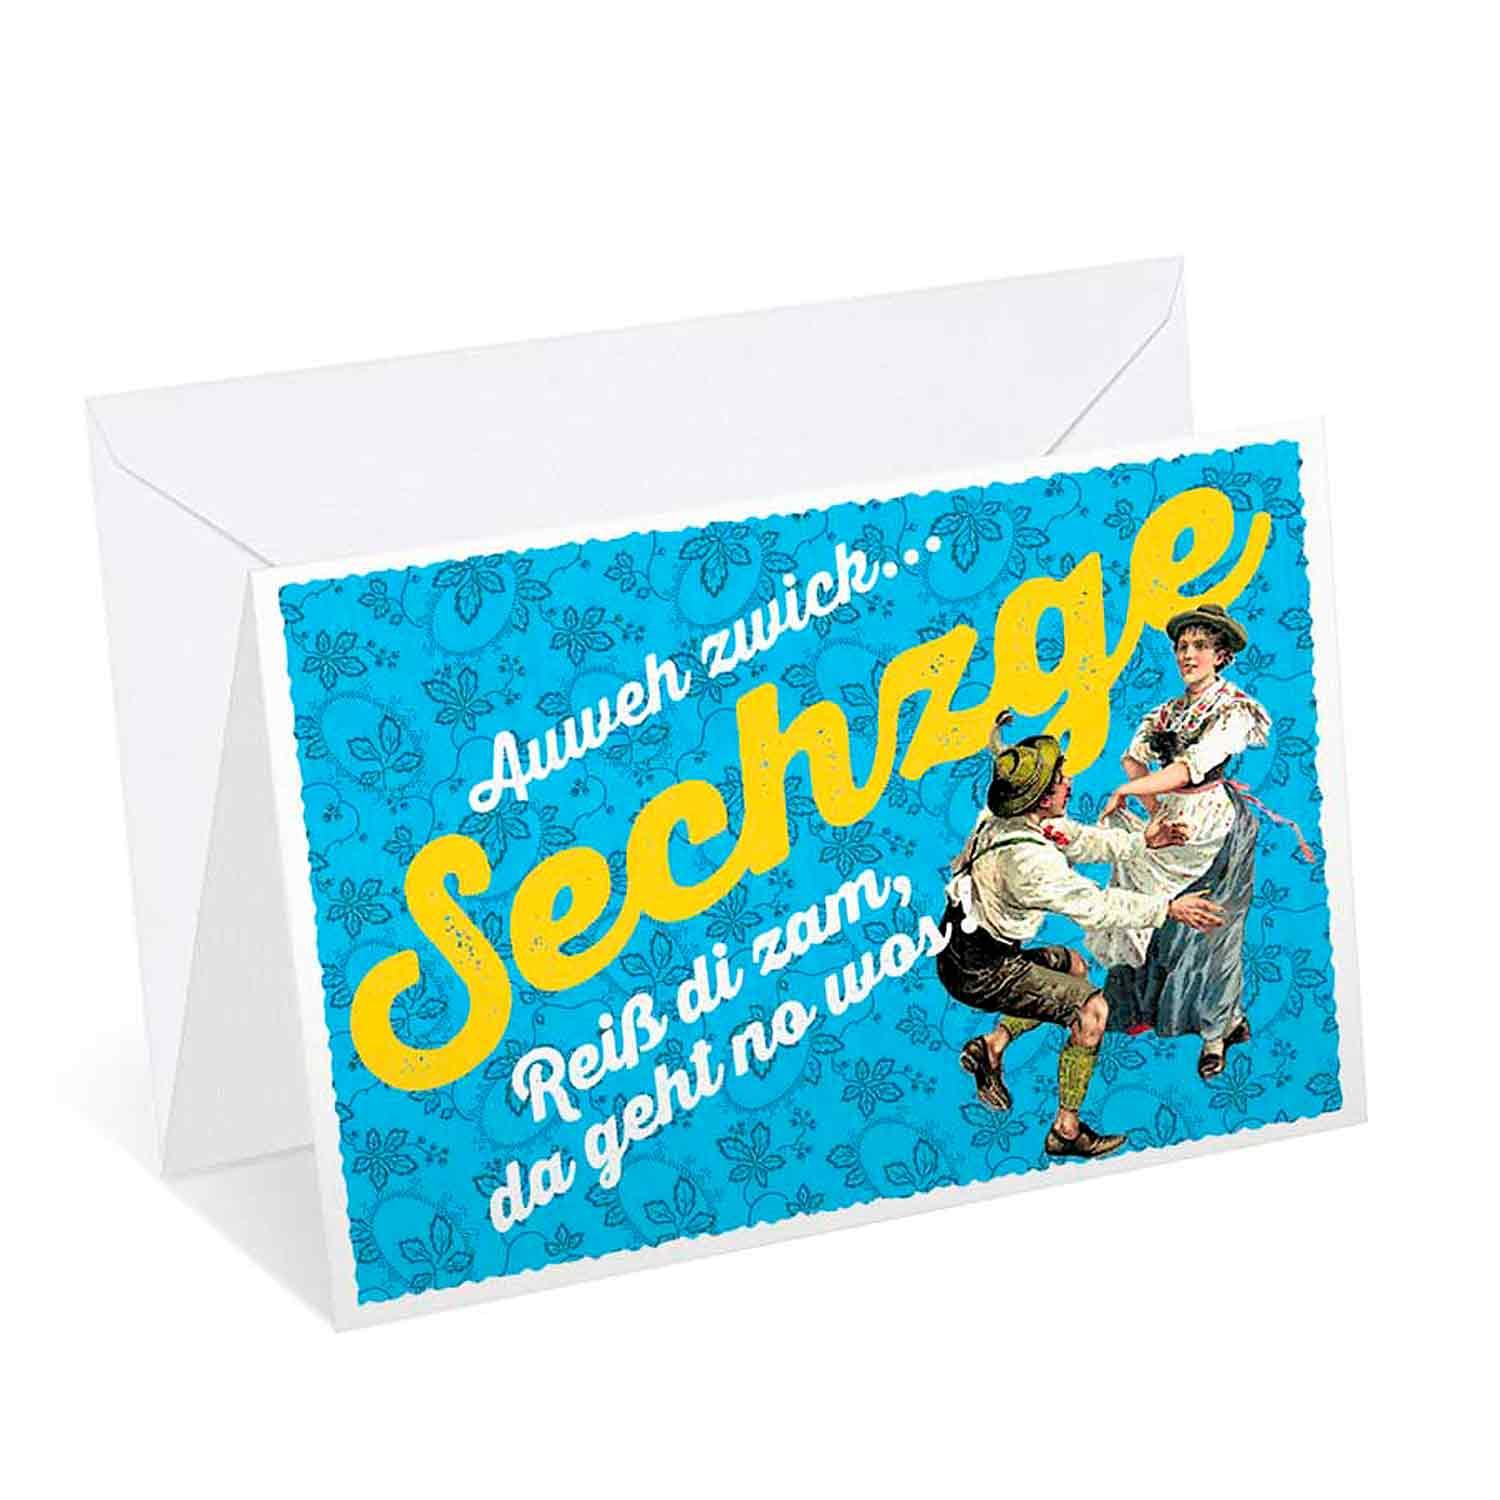 Geburtstagskarte zum 60. "Sechzge" - bavariashop - mei LebensGfui